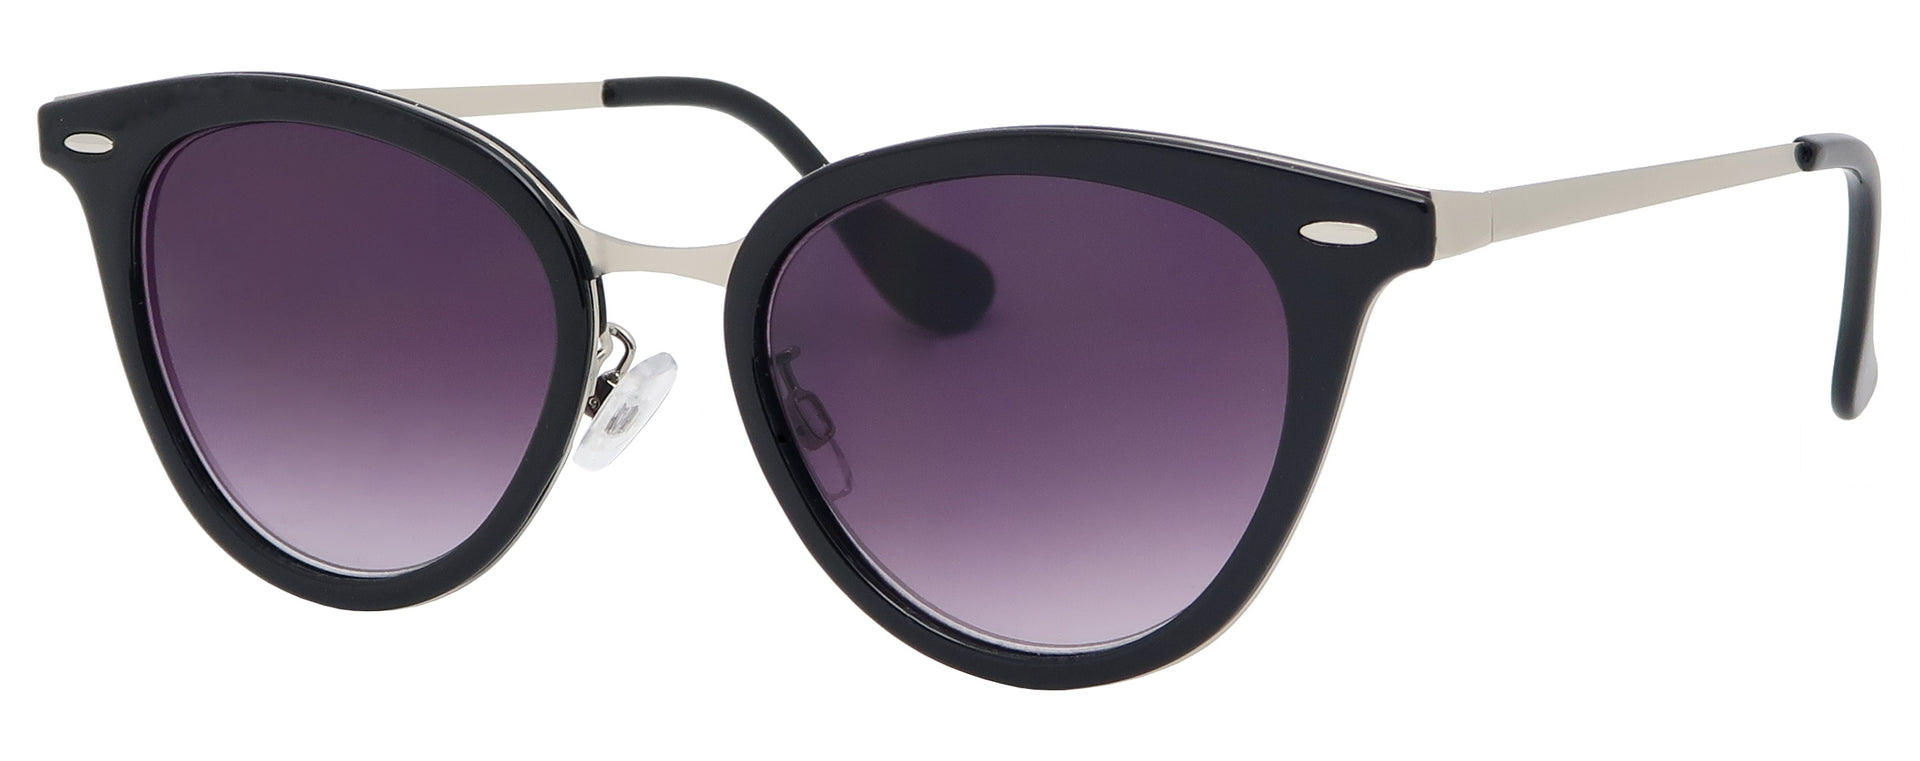 8133SR - Wholesale Women's Fashion Reading Sunglasses